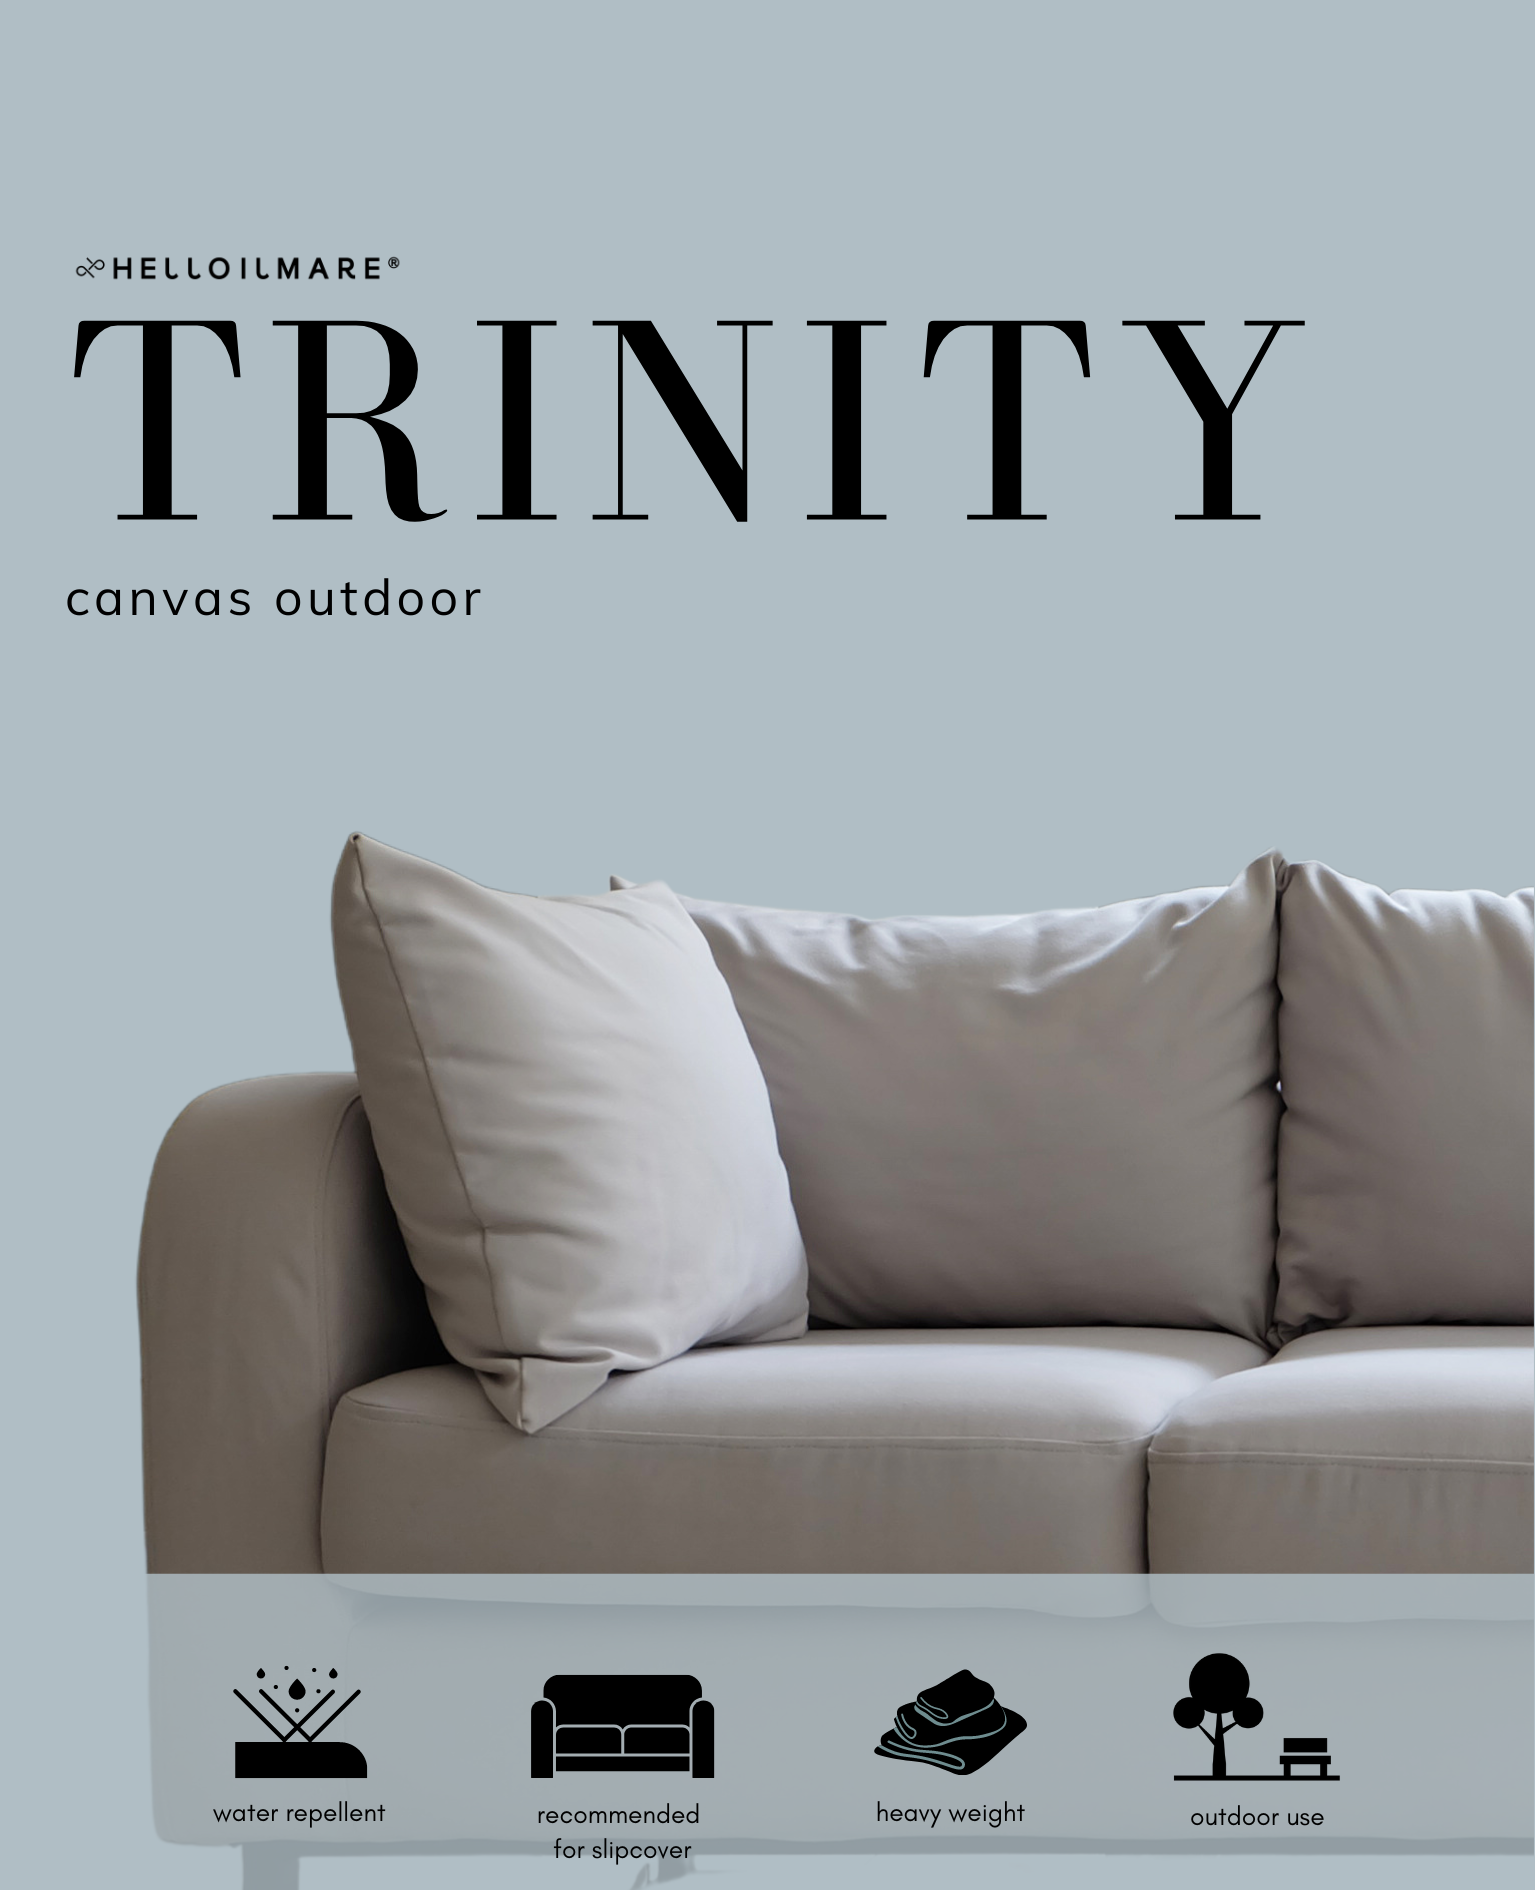 3 Seater Trinity - Helloilmare